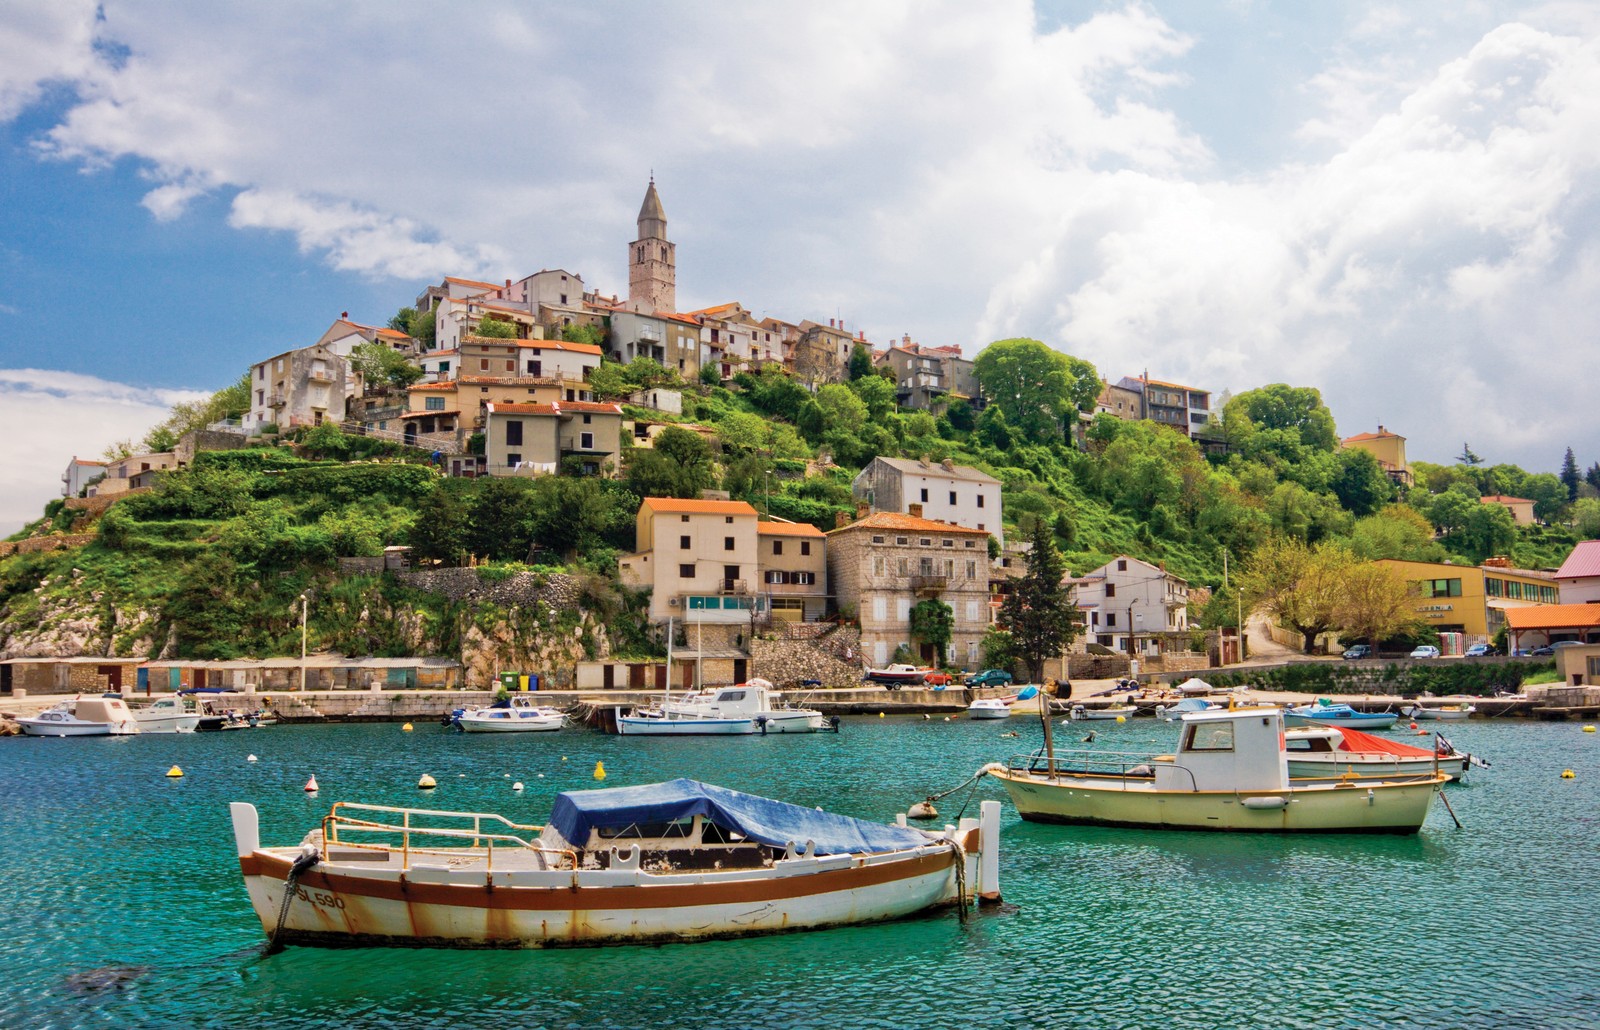 Переезд в хорватию на пмж государство монако википедия